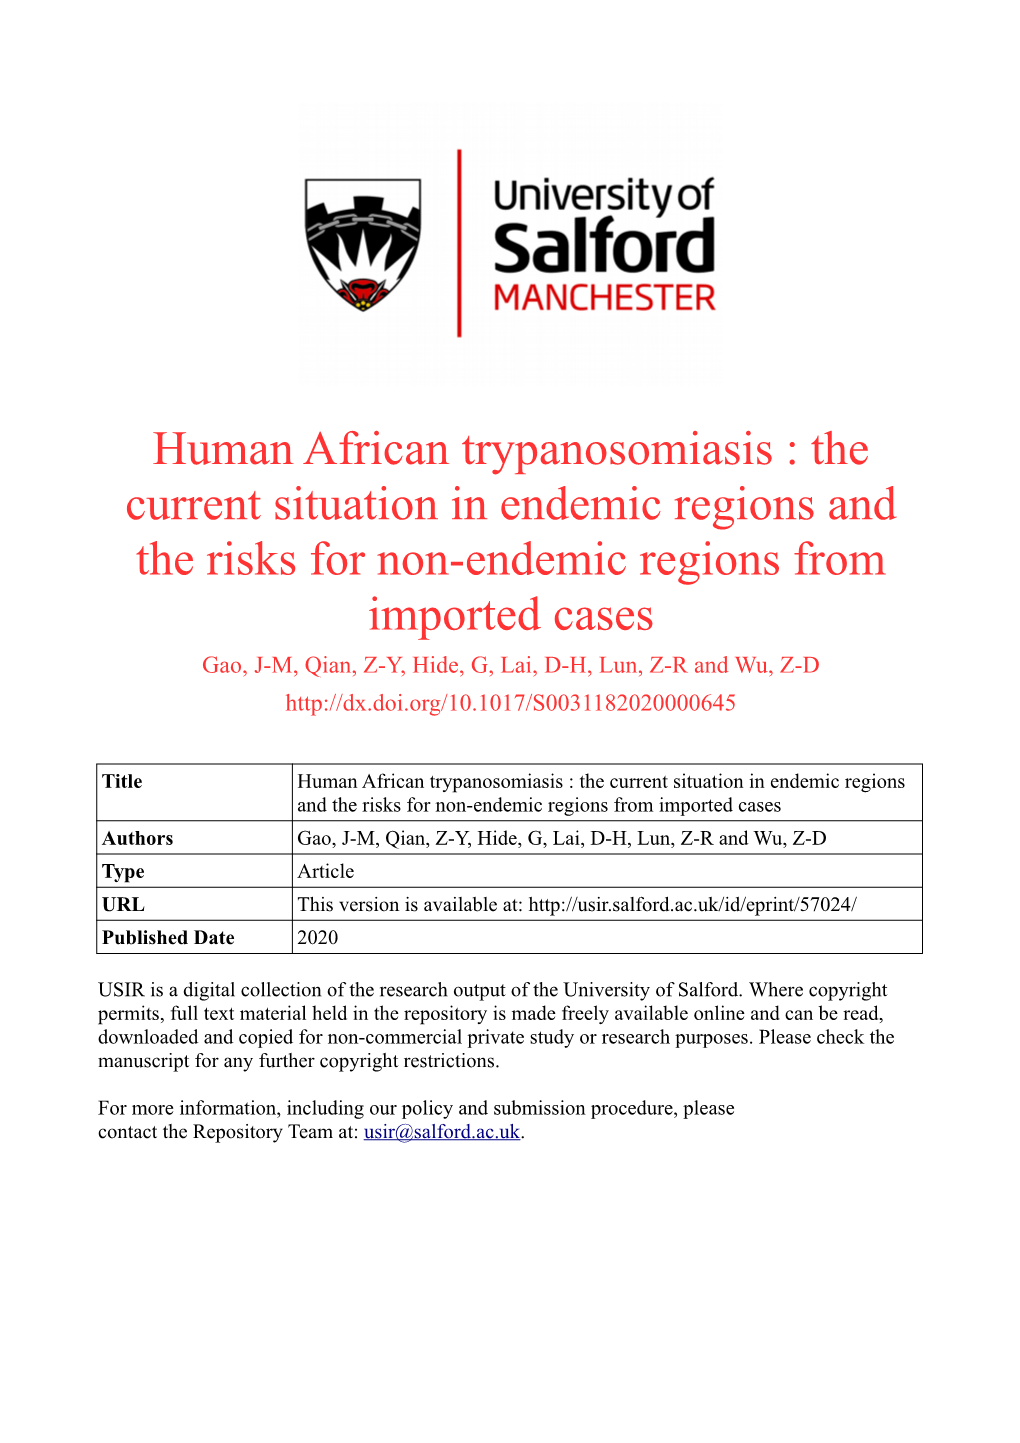 Human African Trypanosomiasis